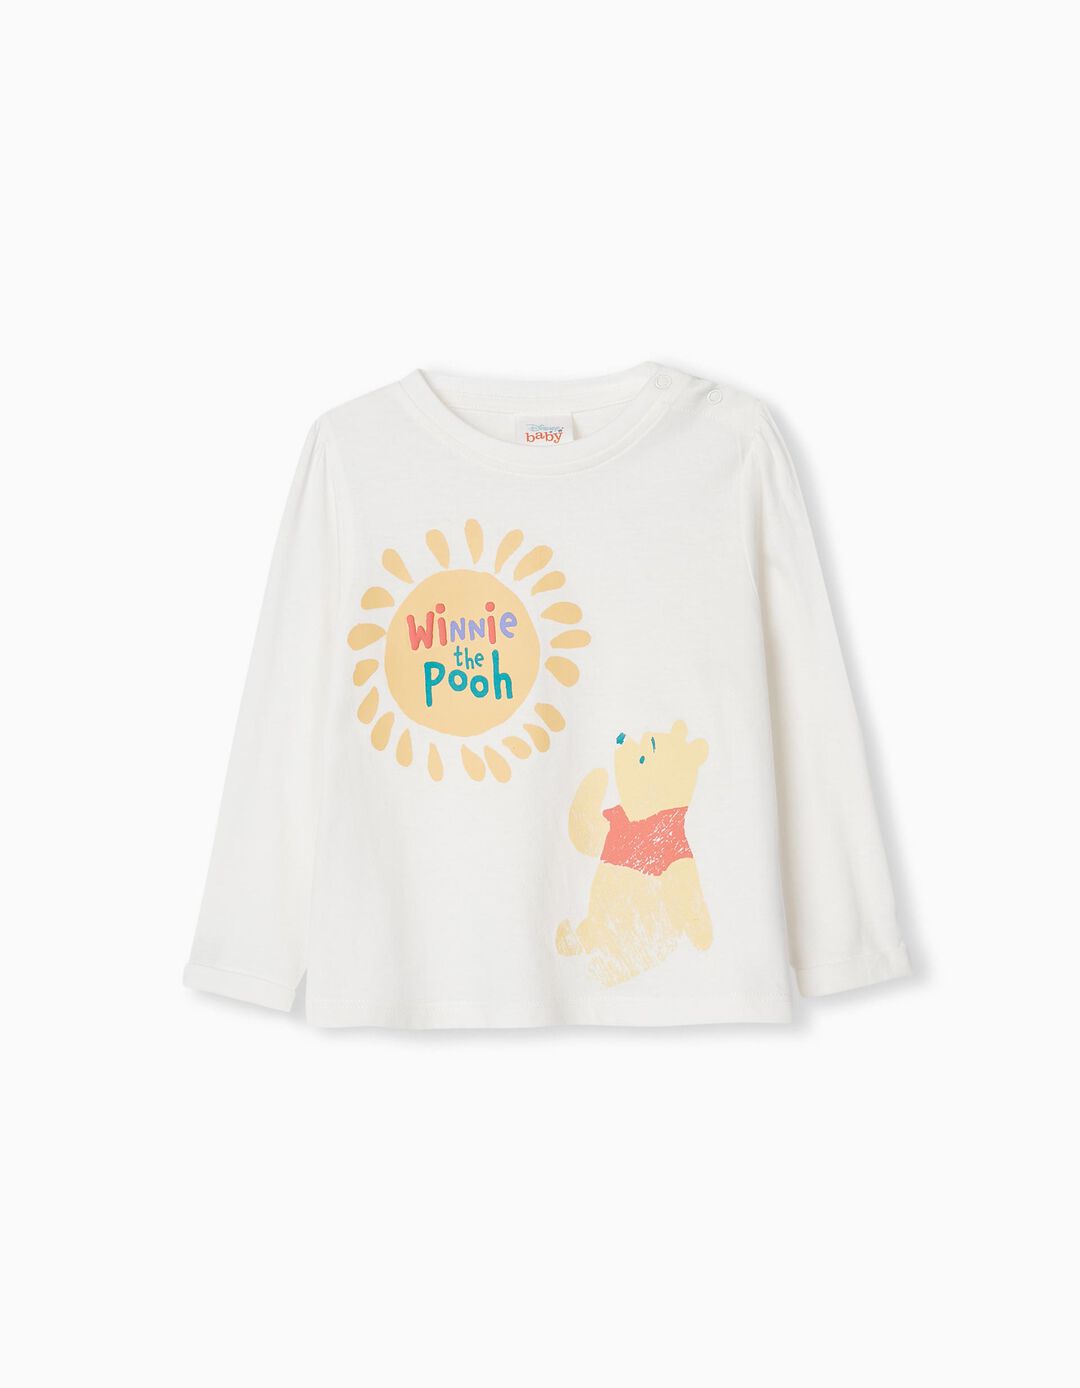 T-shirt de Manga Comprida 'Winnie the Pooh', Recém-nascida, Branco